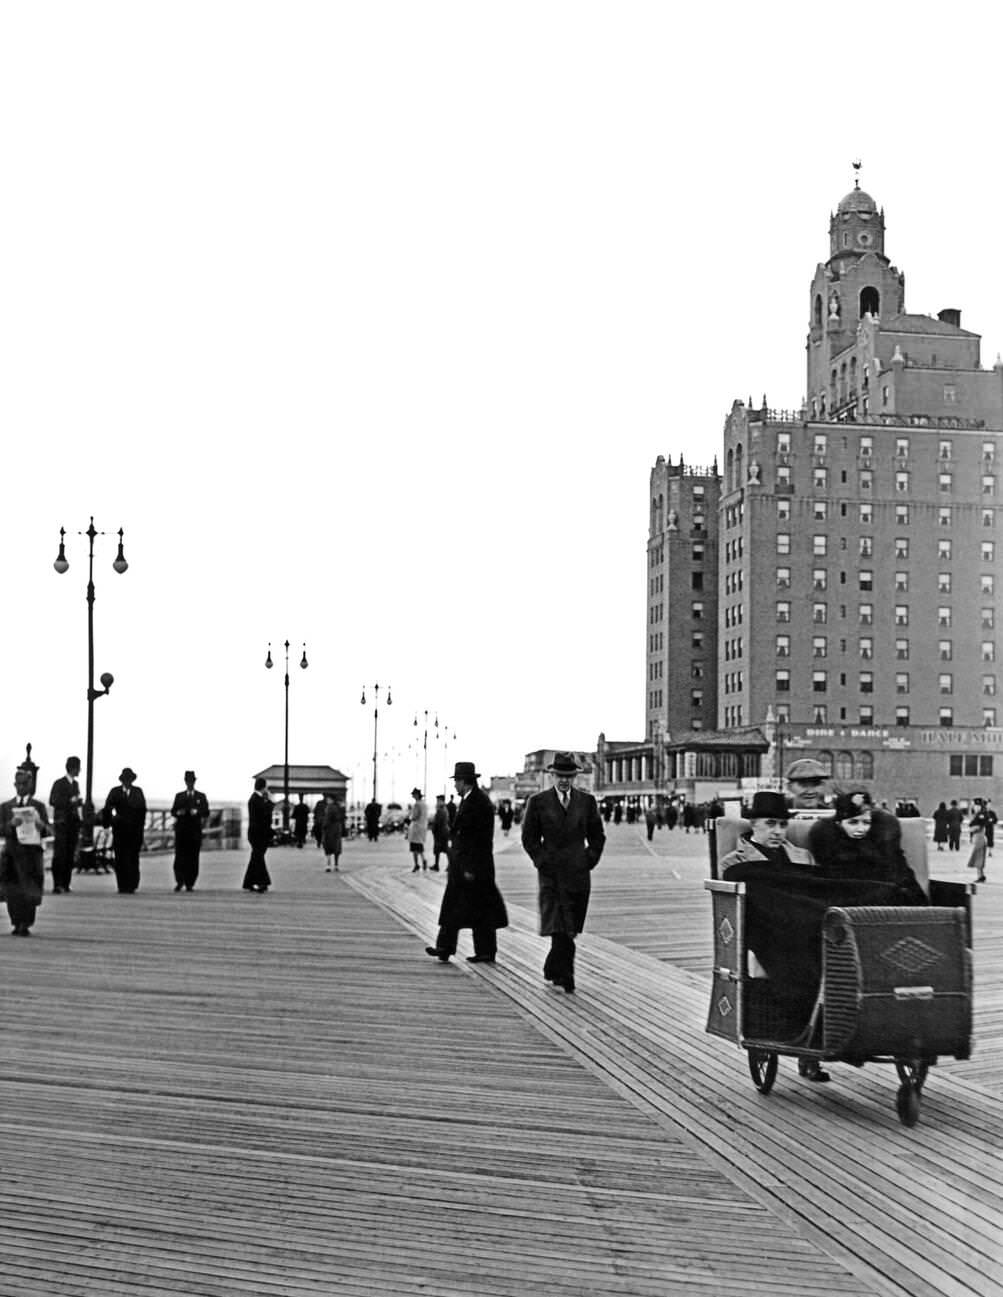 People Promenading On The Boardwalk At Coney Island, Brooklyn, 1938